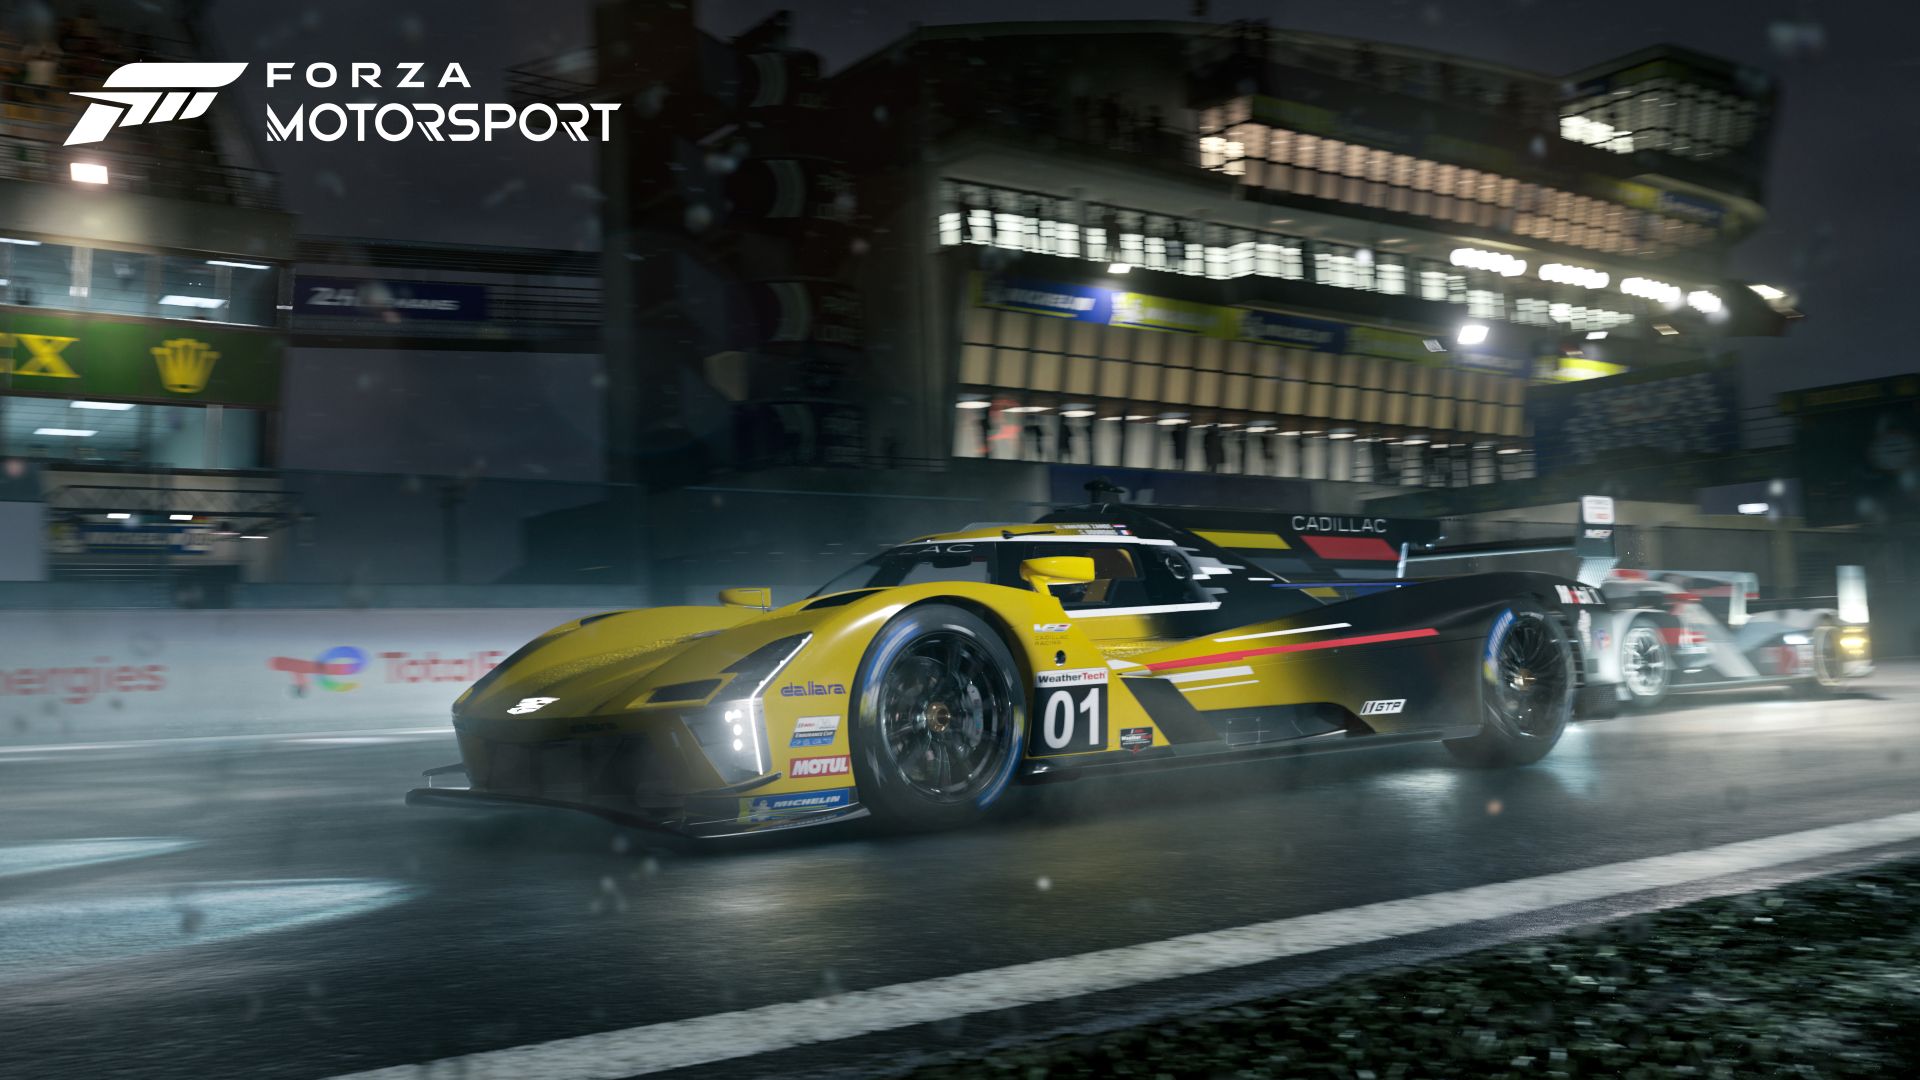 GRID Autosport Custom Edition - Gameplay Walkthrough Part 2